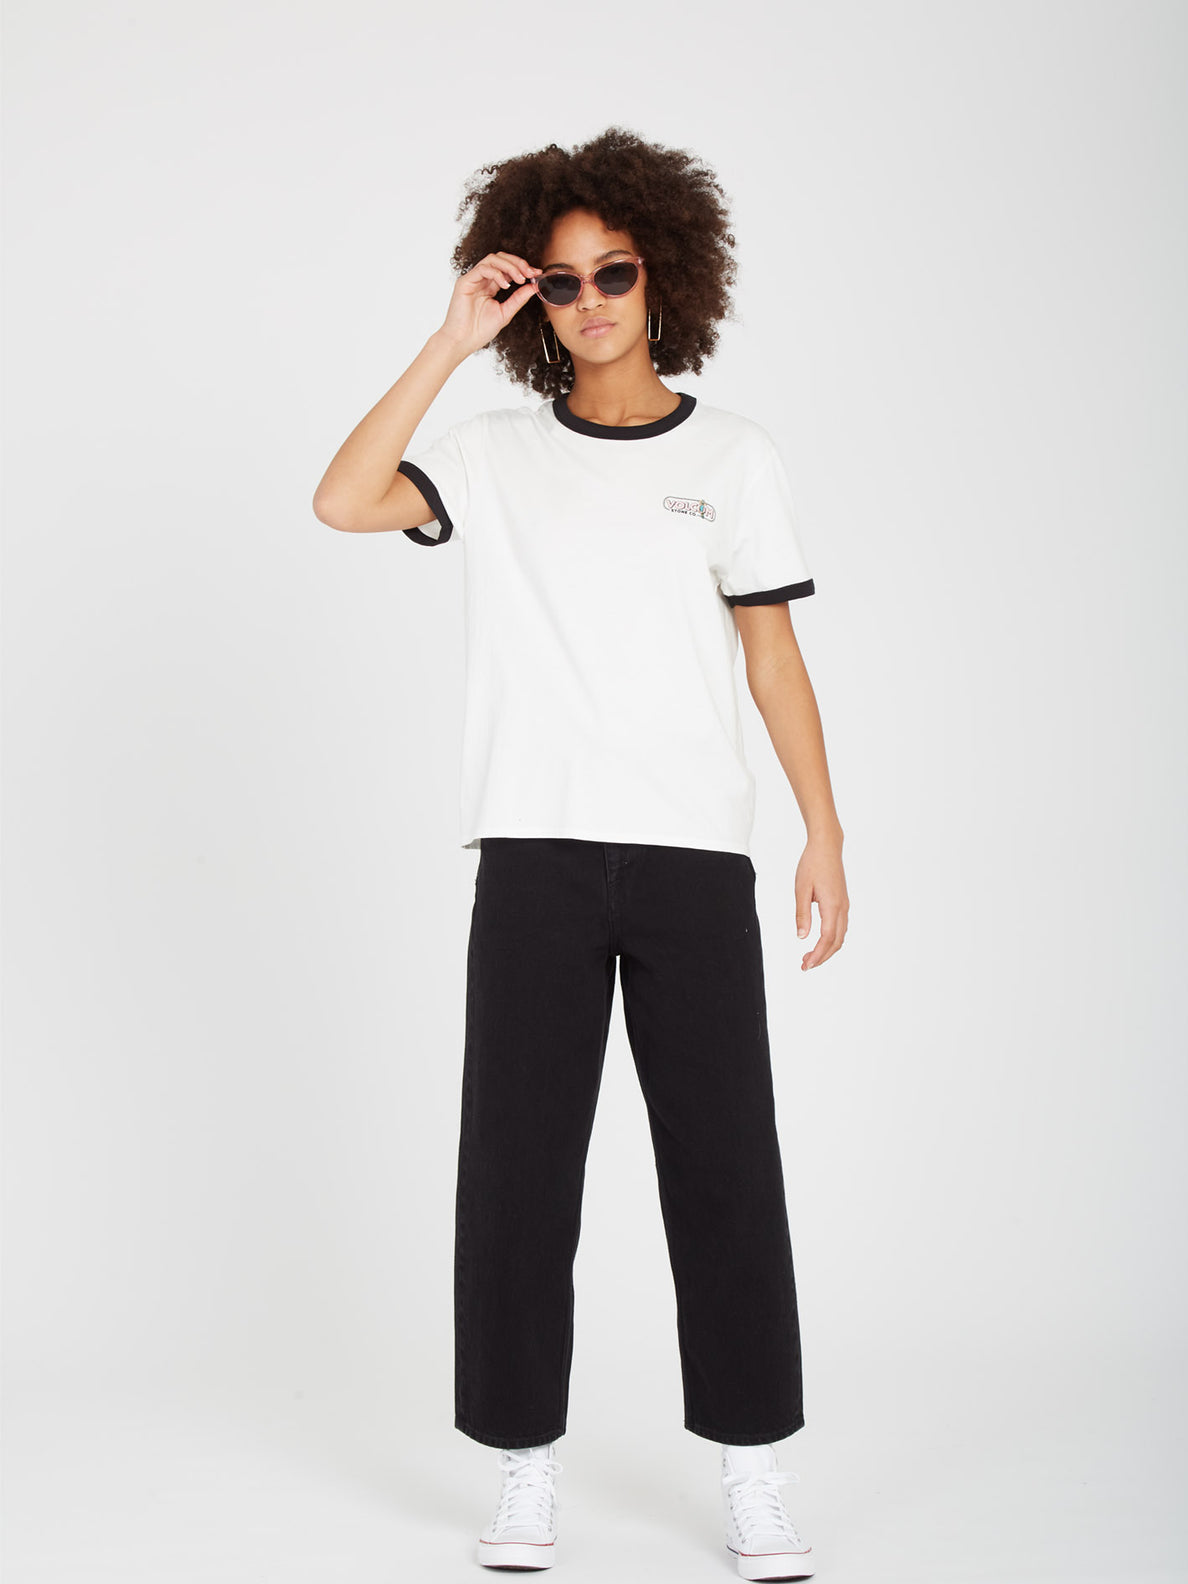 Volcom Truly Ringer Damen T-Shirt – Star White | Meistverkaufte Produkte | Neue Produkte | Neueste Produkte | surfdevils.com